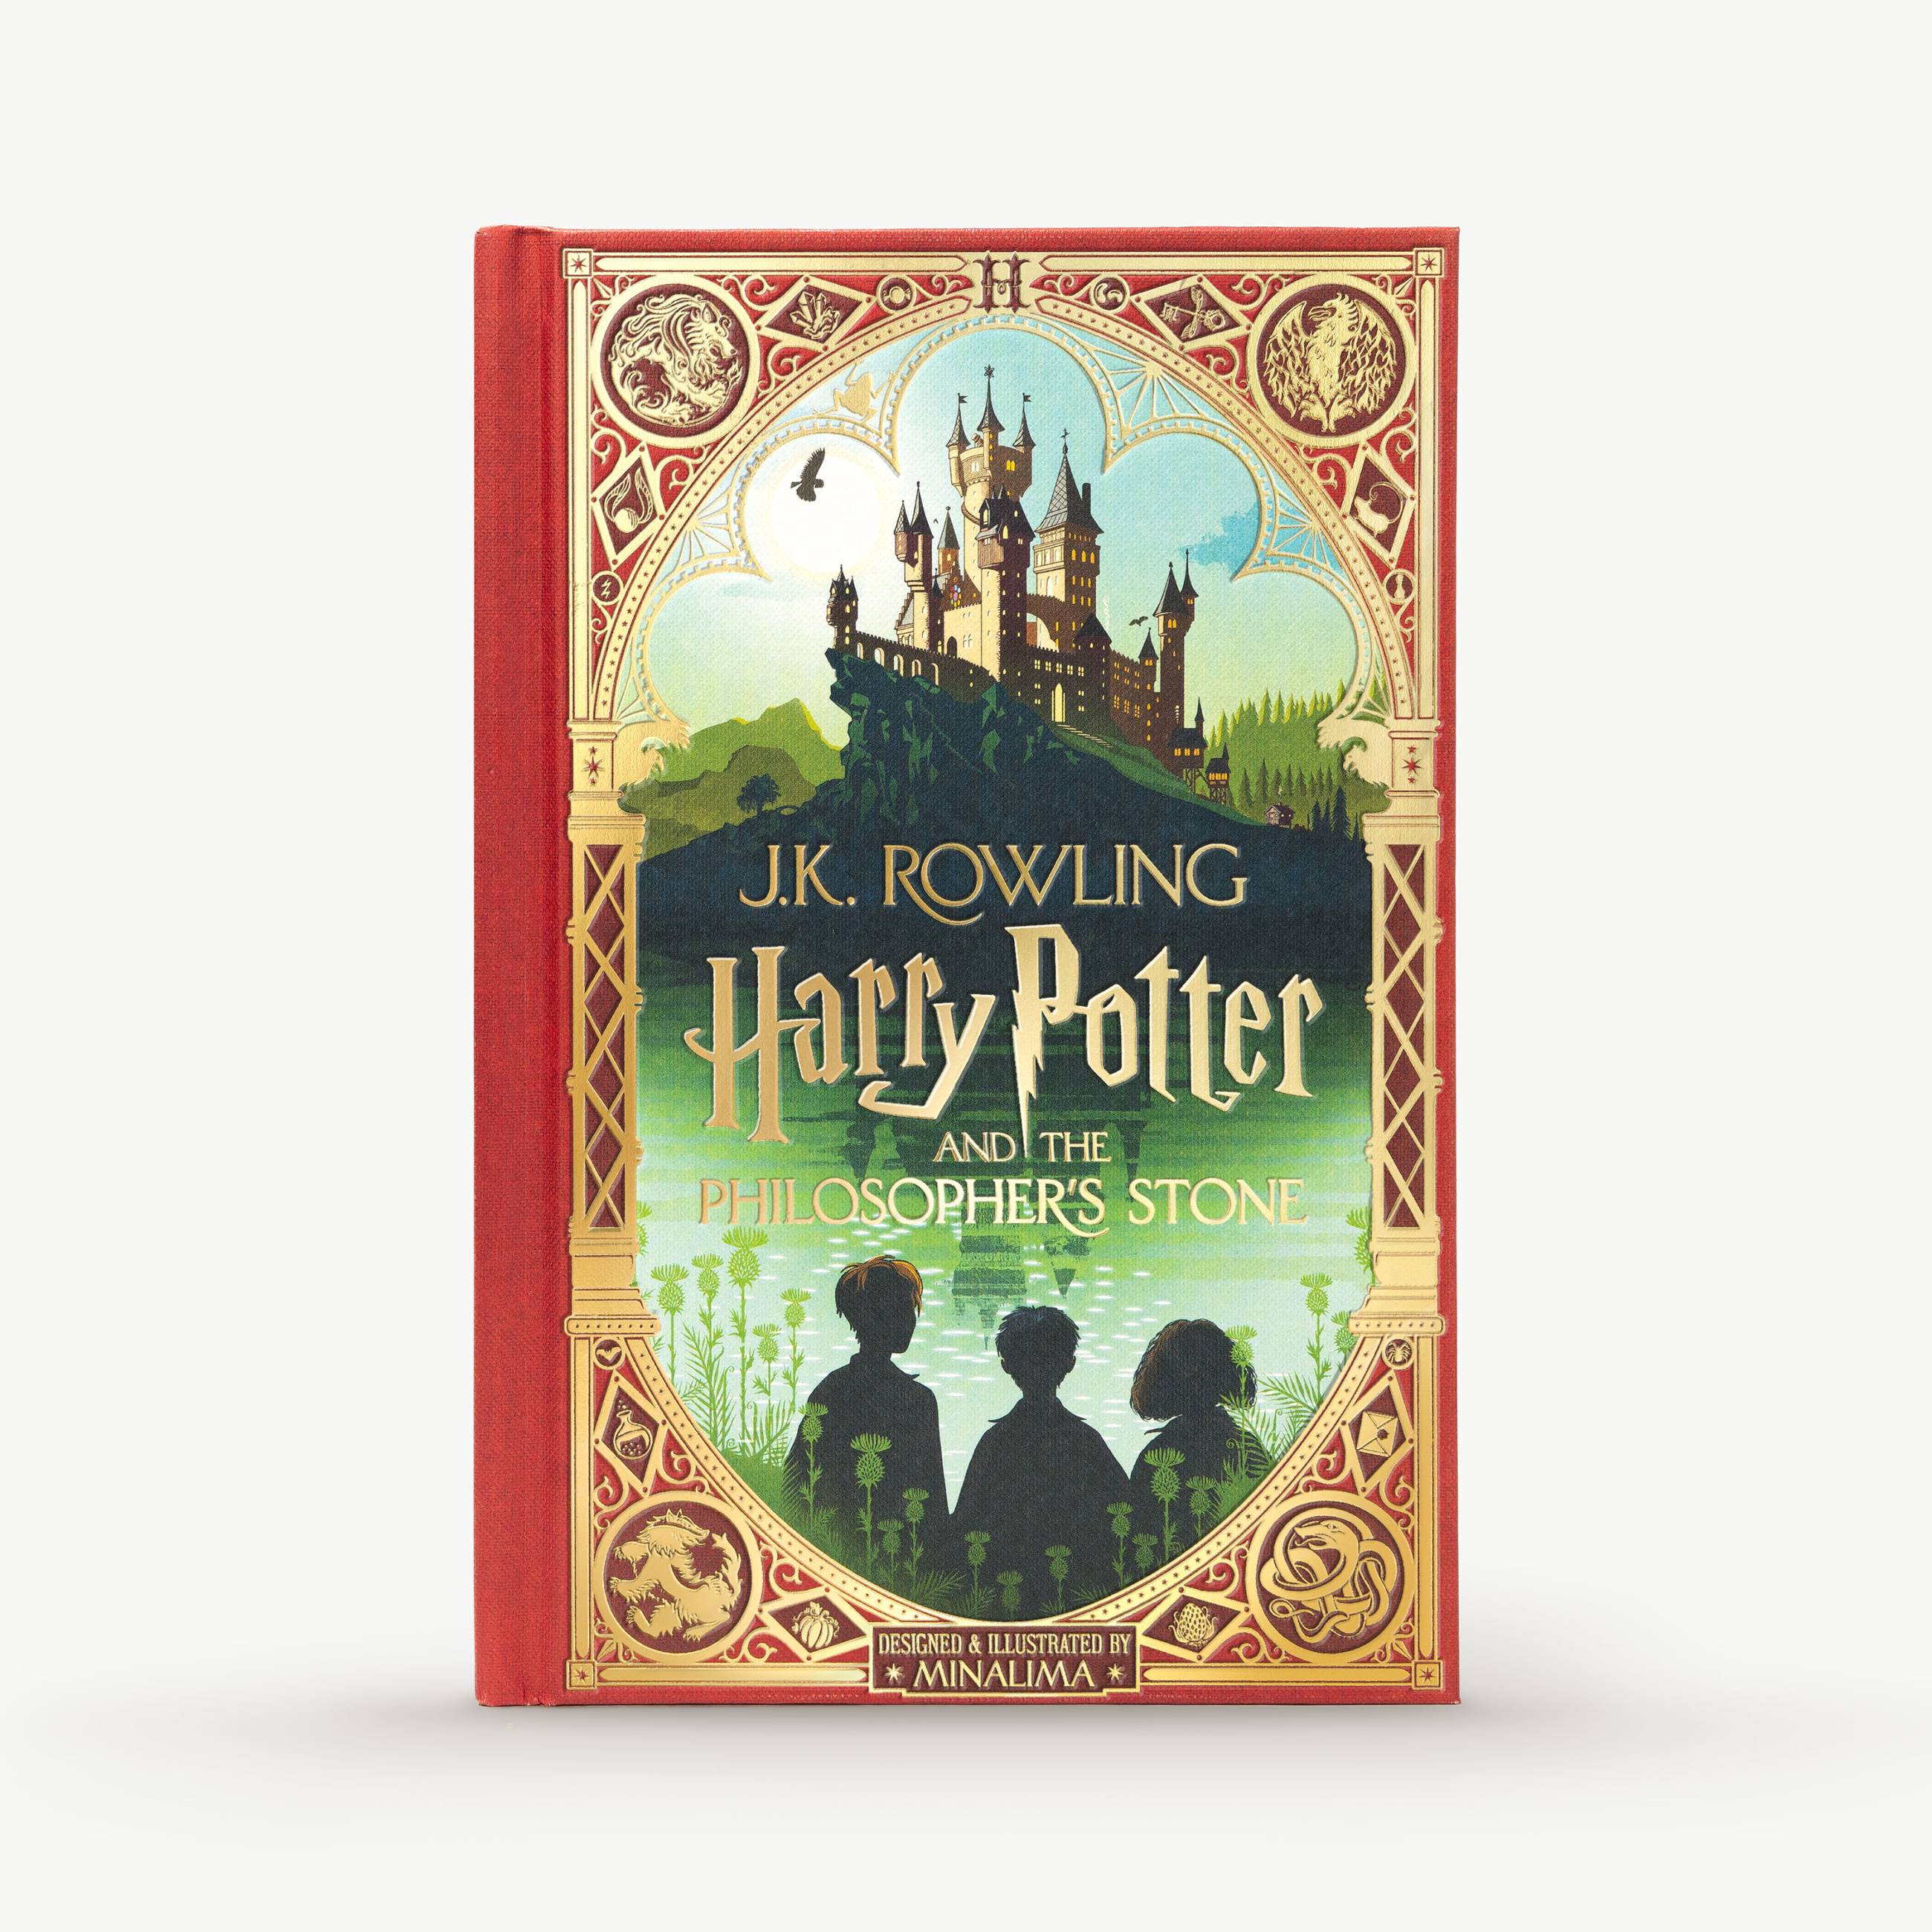 Philosopher's Stone' German '20 Years of Magic' edition — Harry